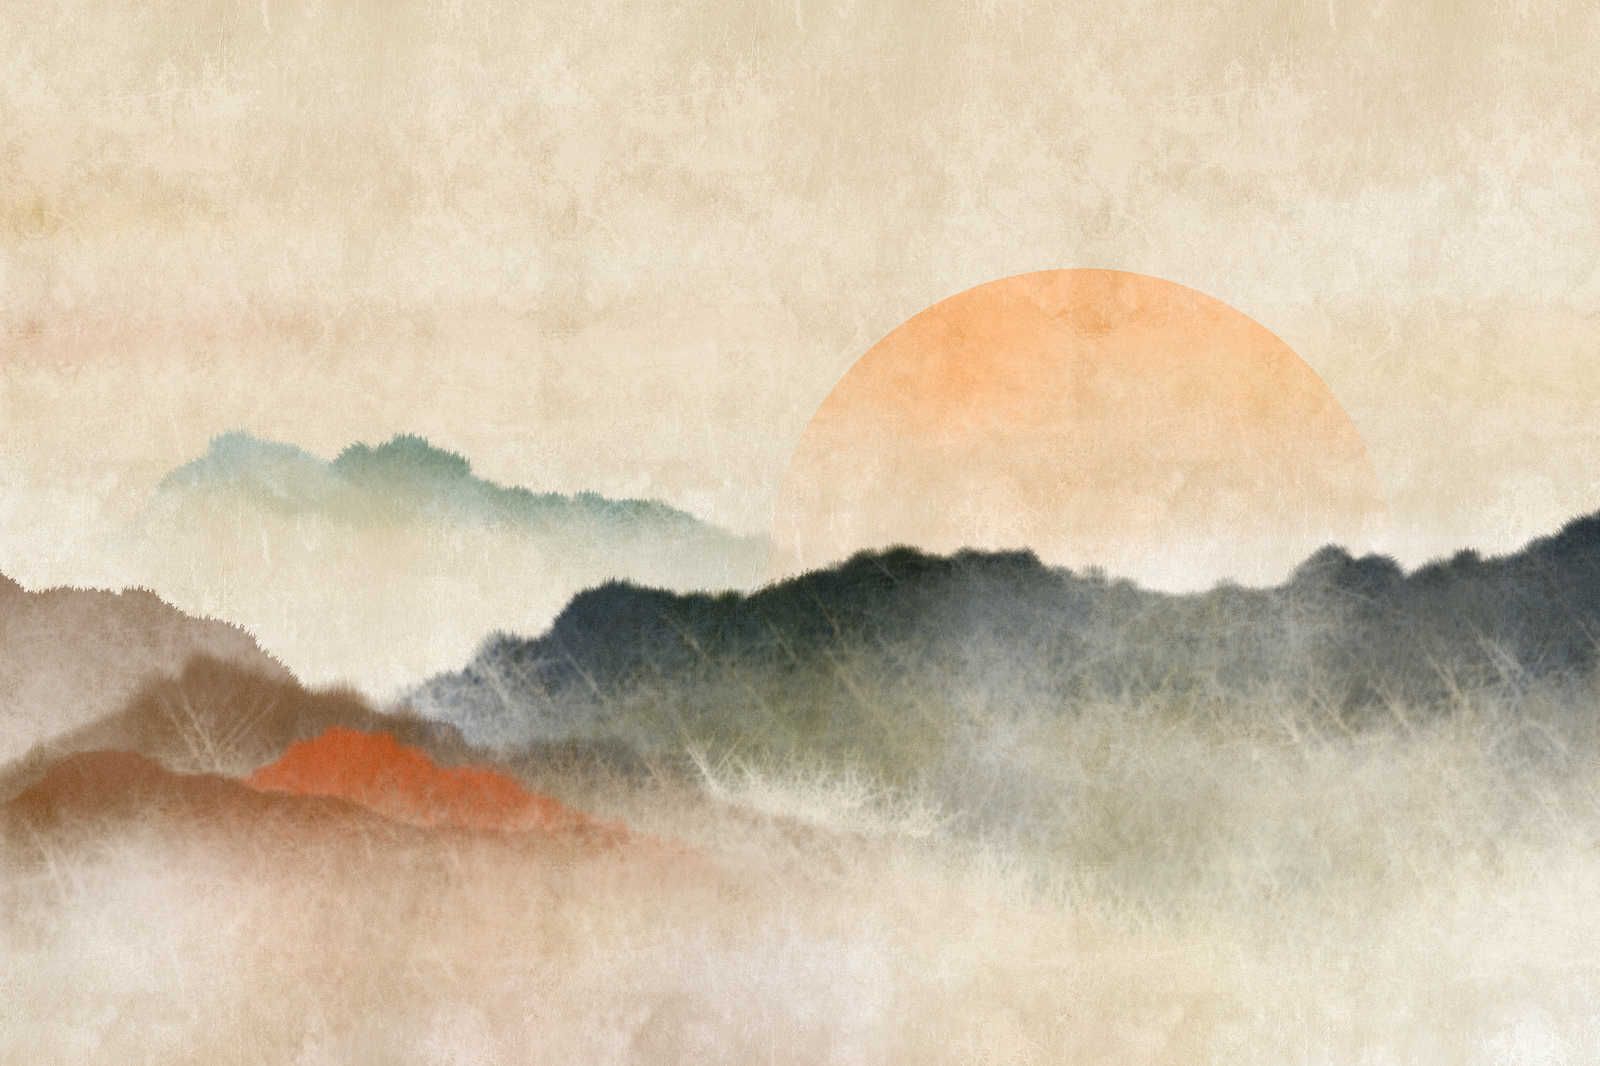             Akaishi 3 - Canvas painting Sunrise, Asia Style Art Print - 1.20 m x 0.80 m
        